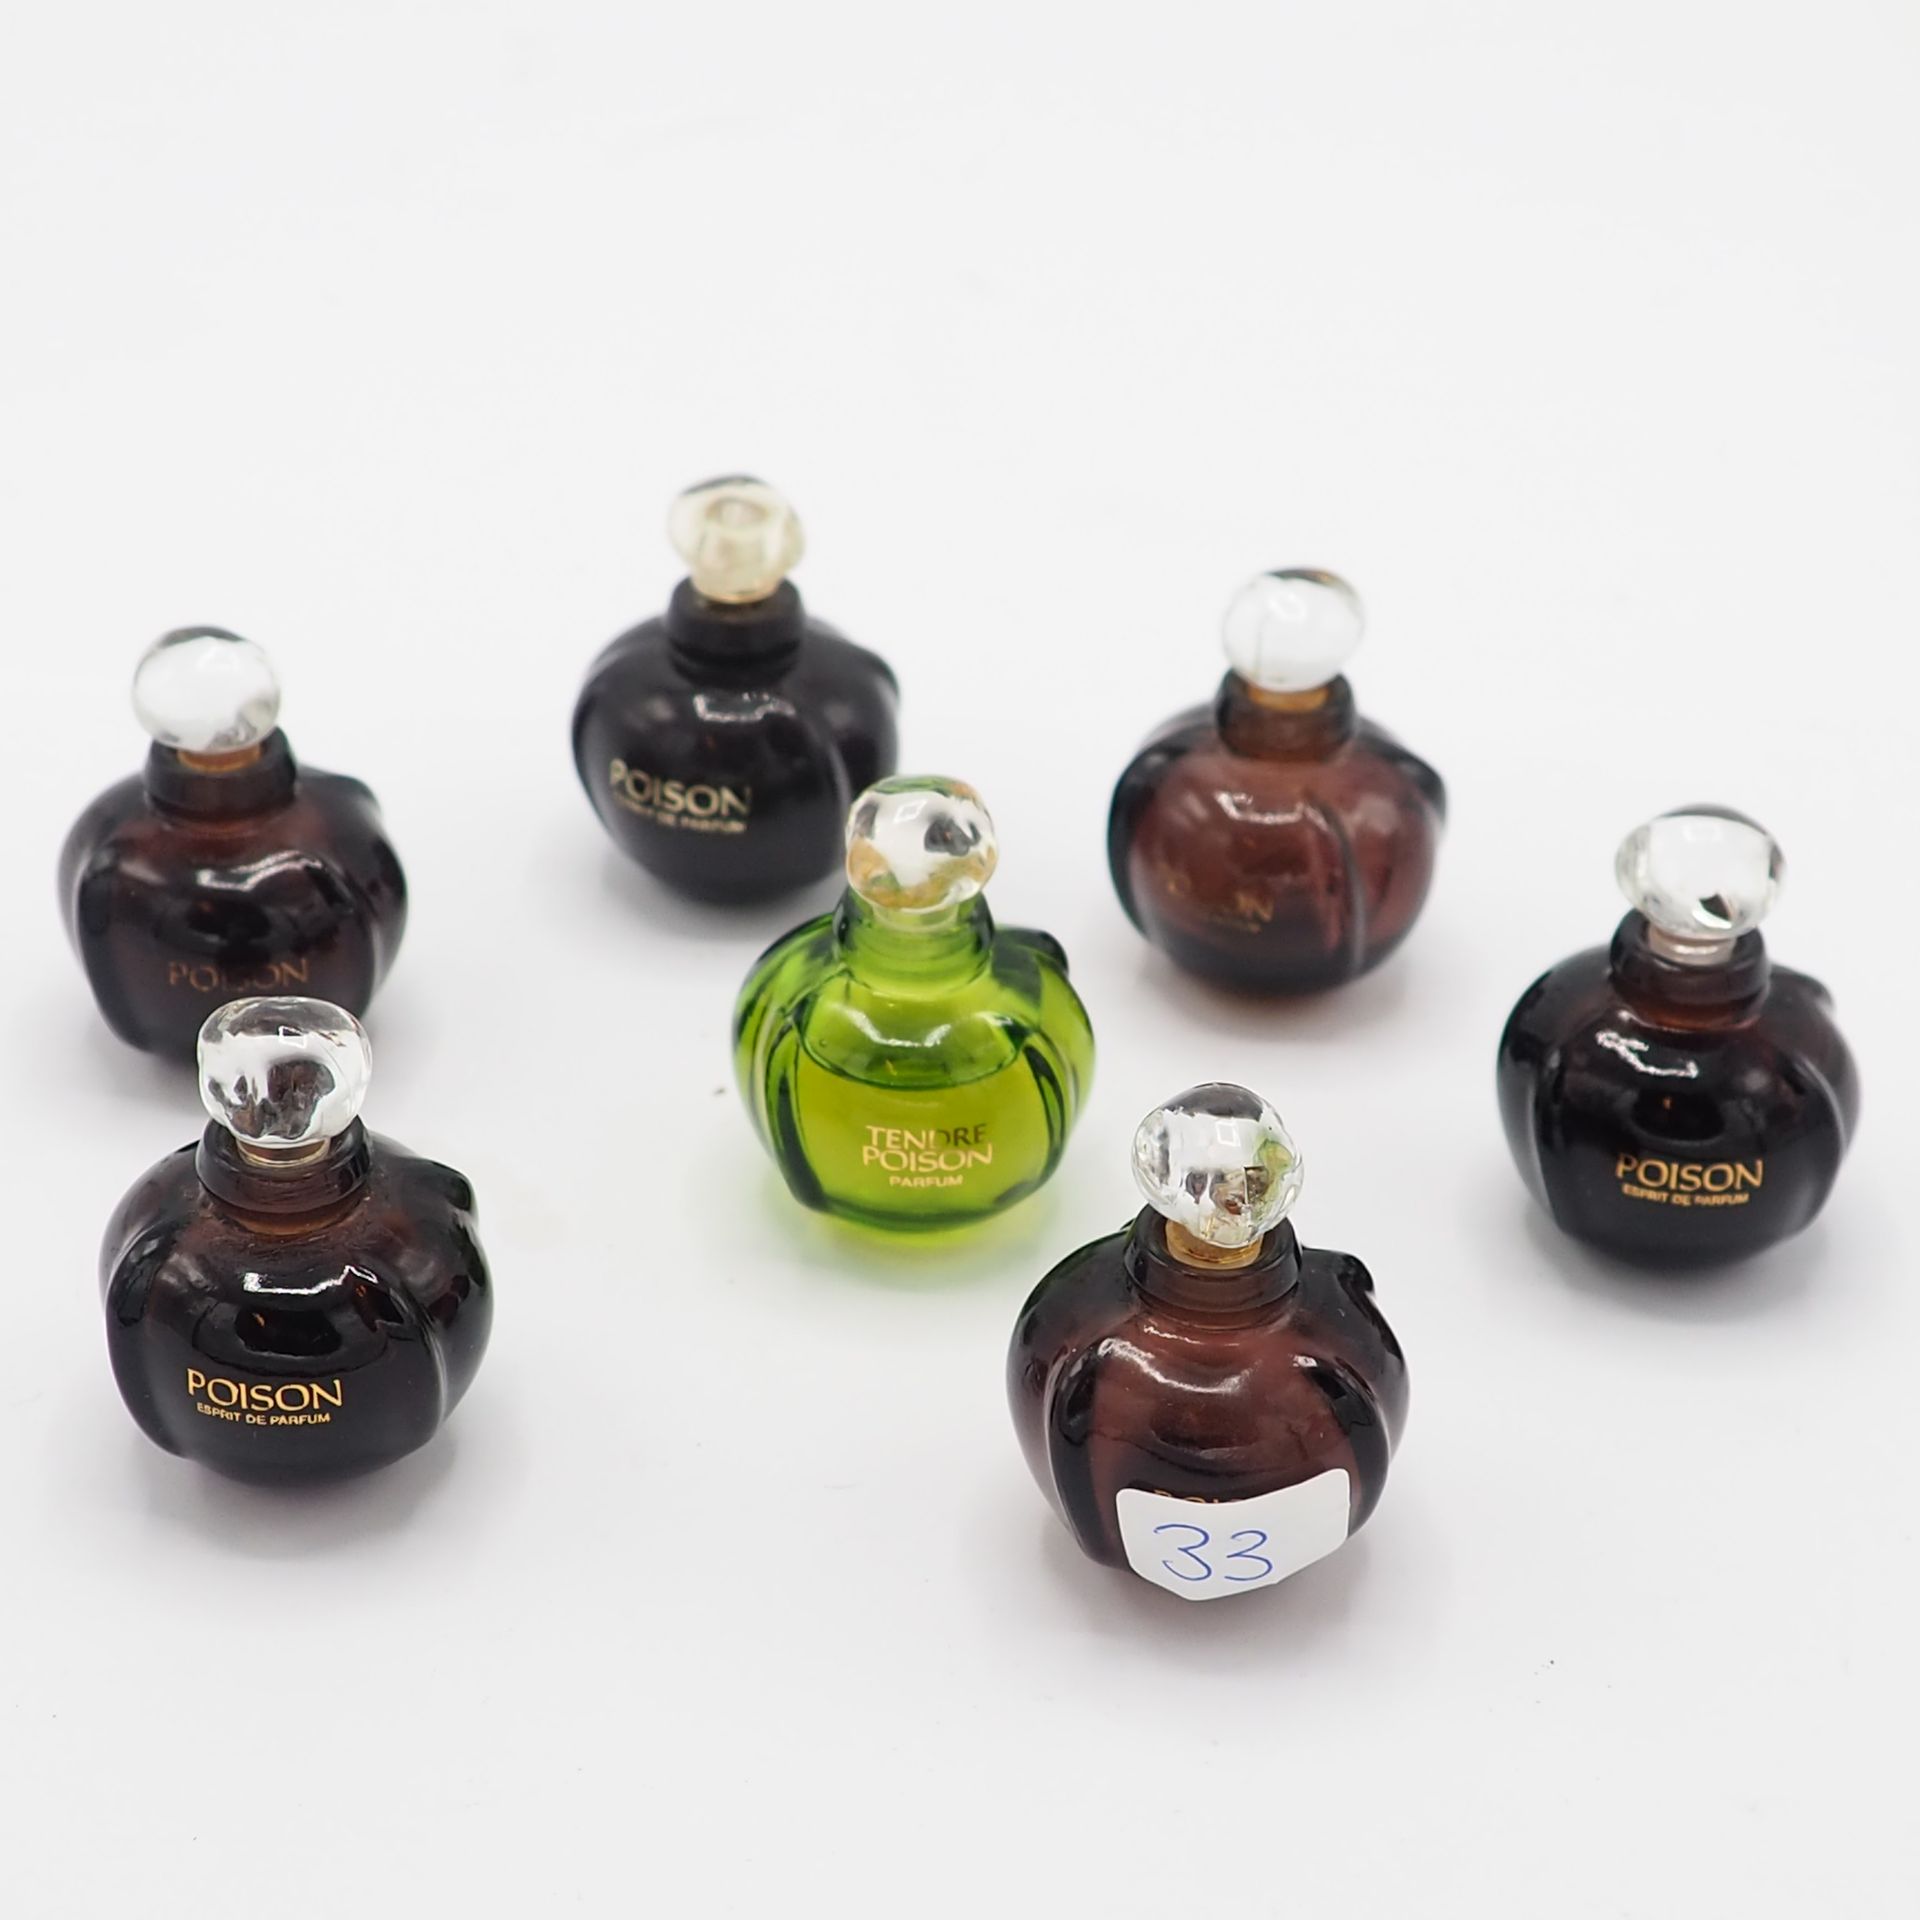 CHRISTIAN DIOR Christian Dior : Lot de 7 miniatures de poison esprit de parfum